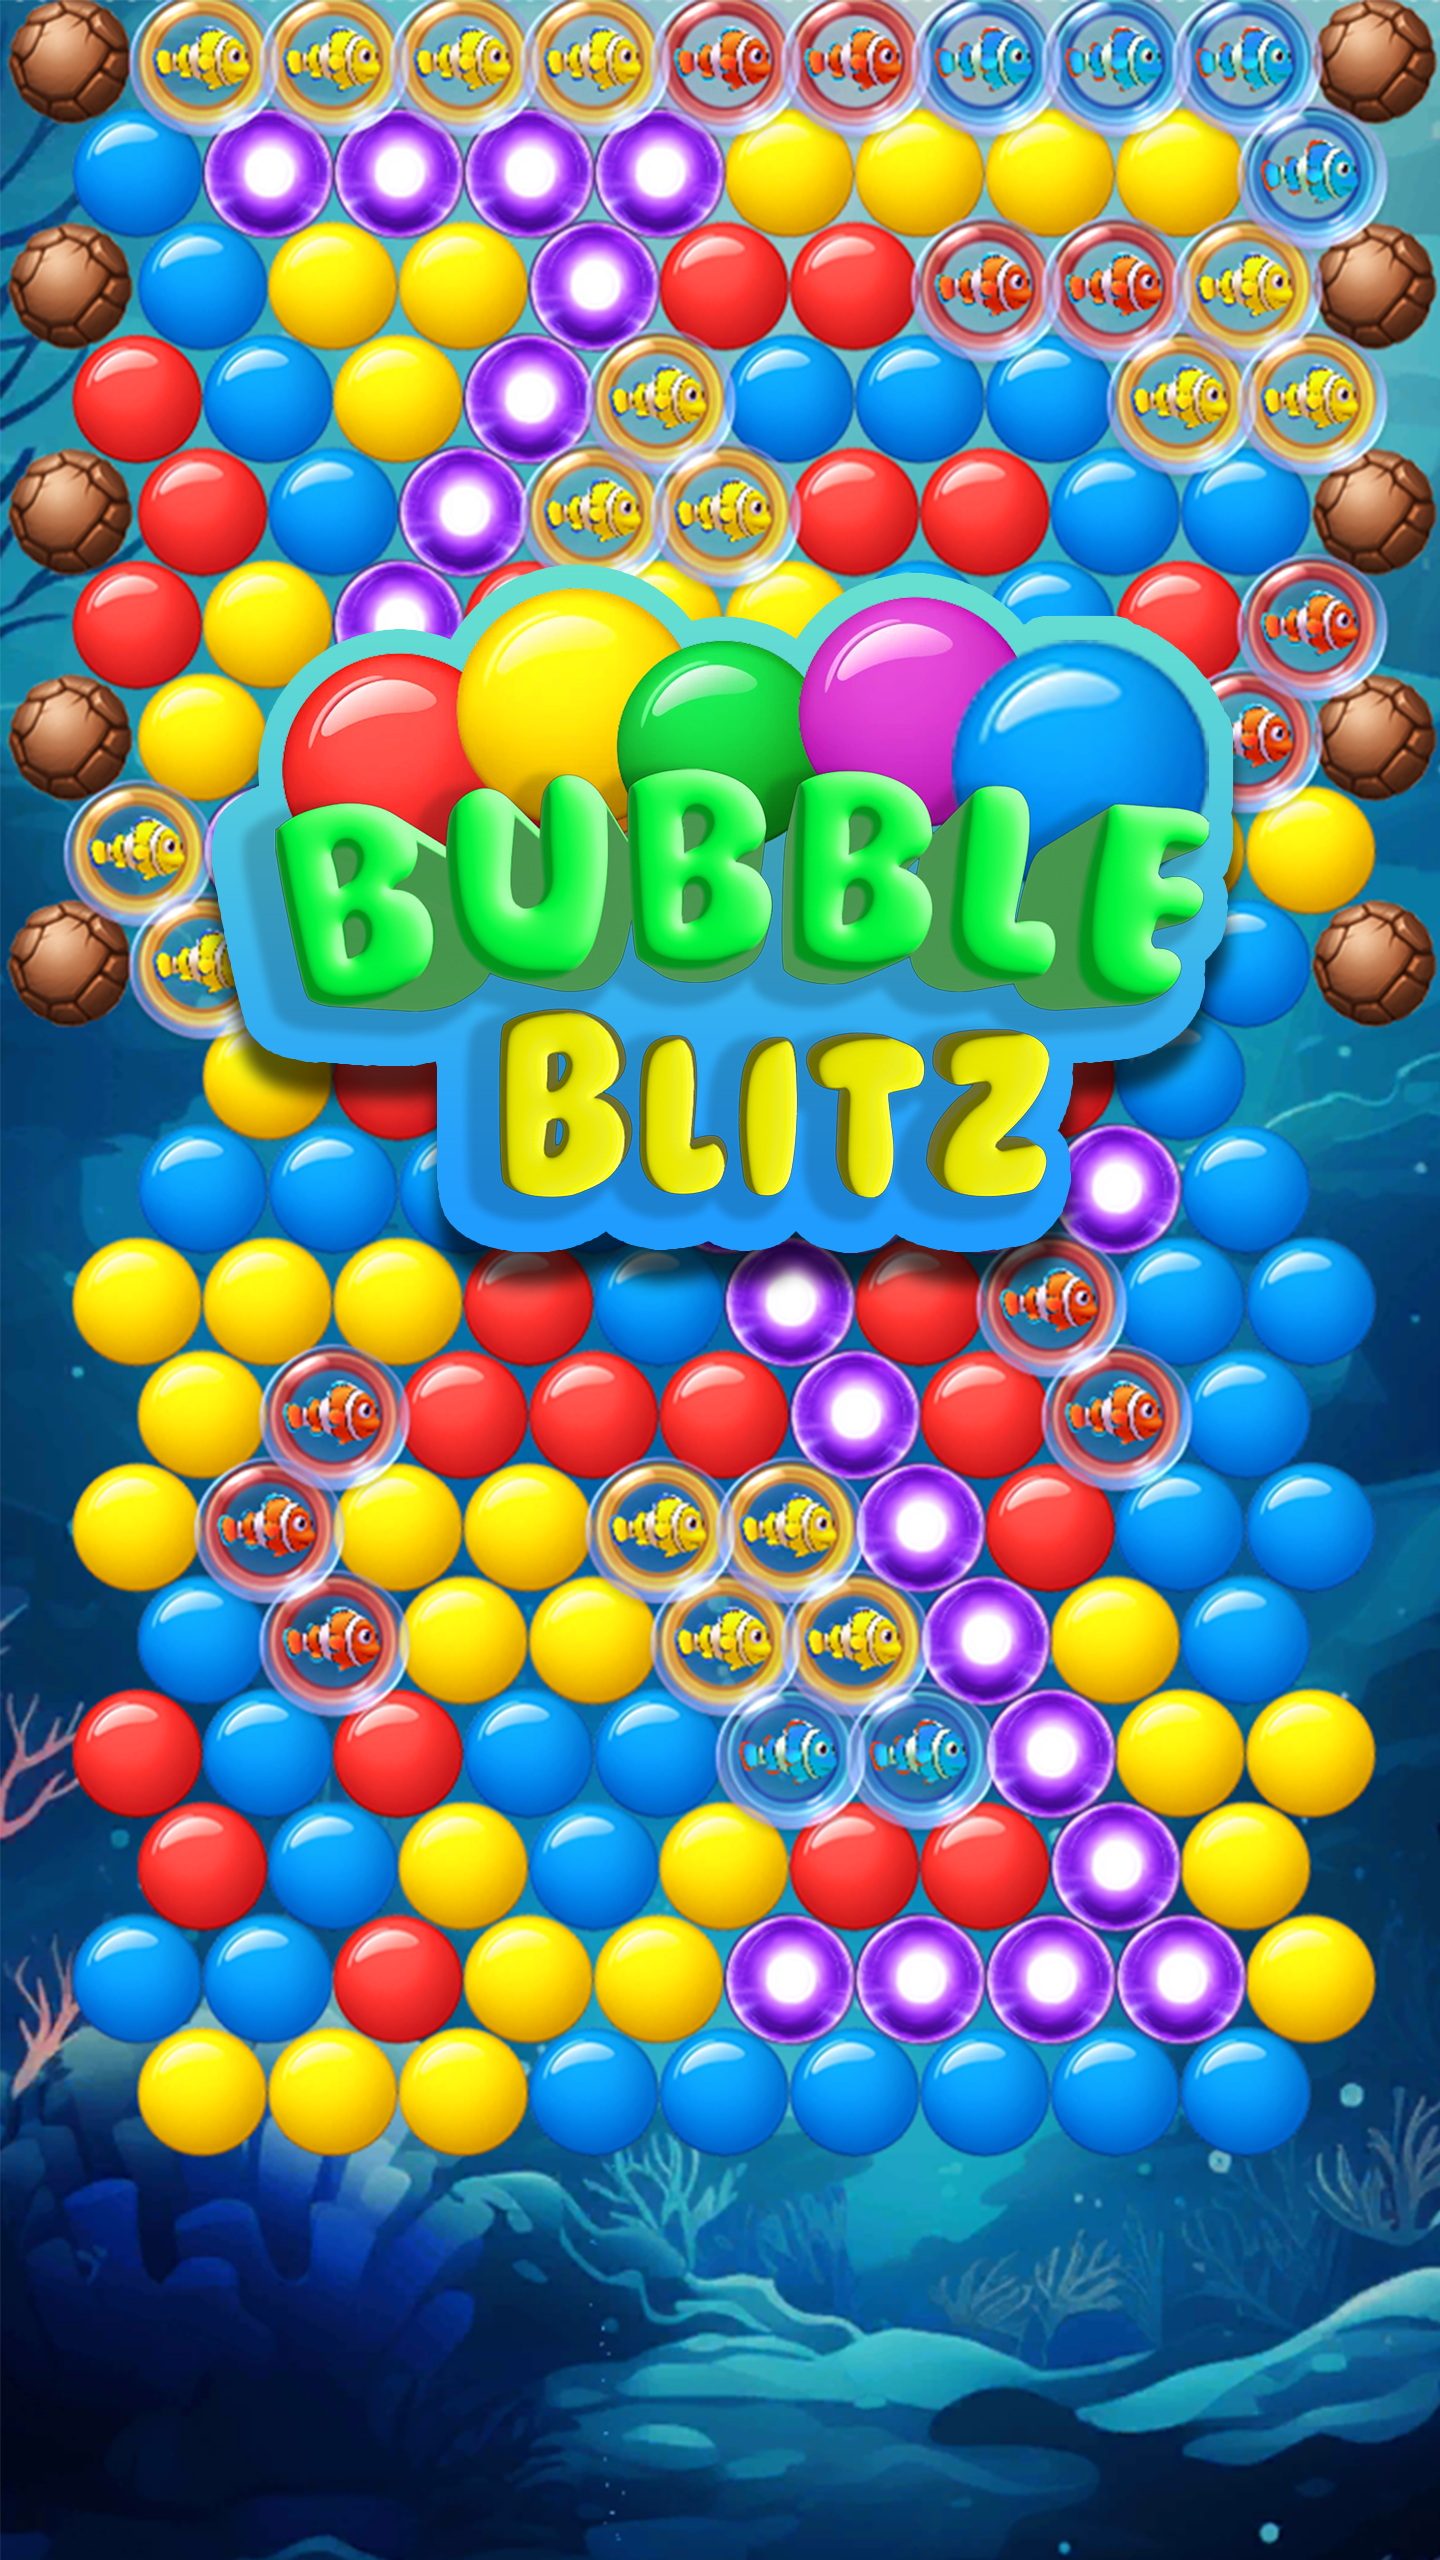 Jogo Bubble Shooter Max versão móvel andróide iOS apk baixar